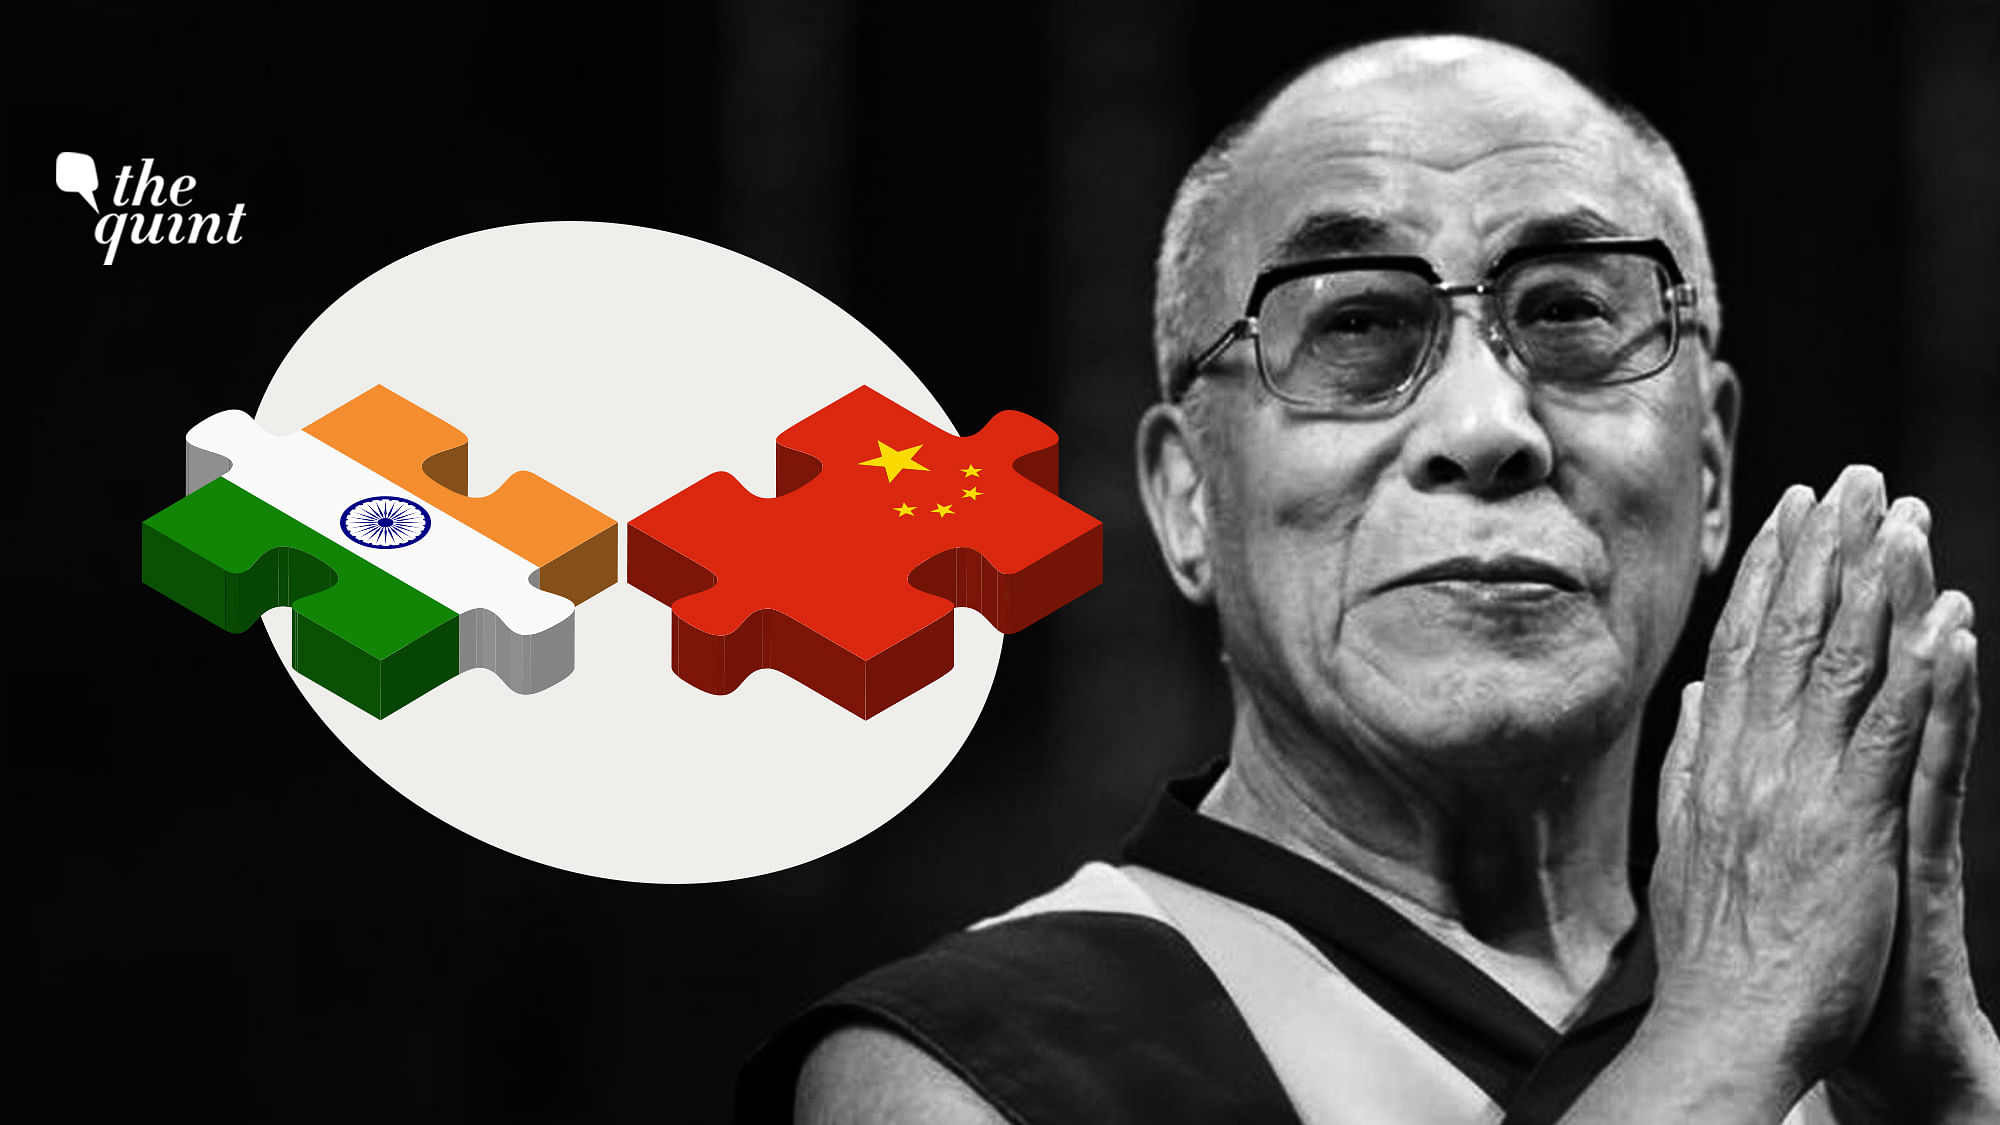 Image of The Dalai Lama, India &amp; China’s flags used for representational purposes.